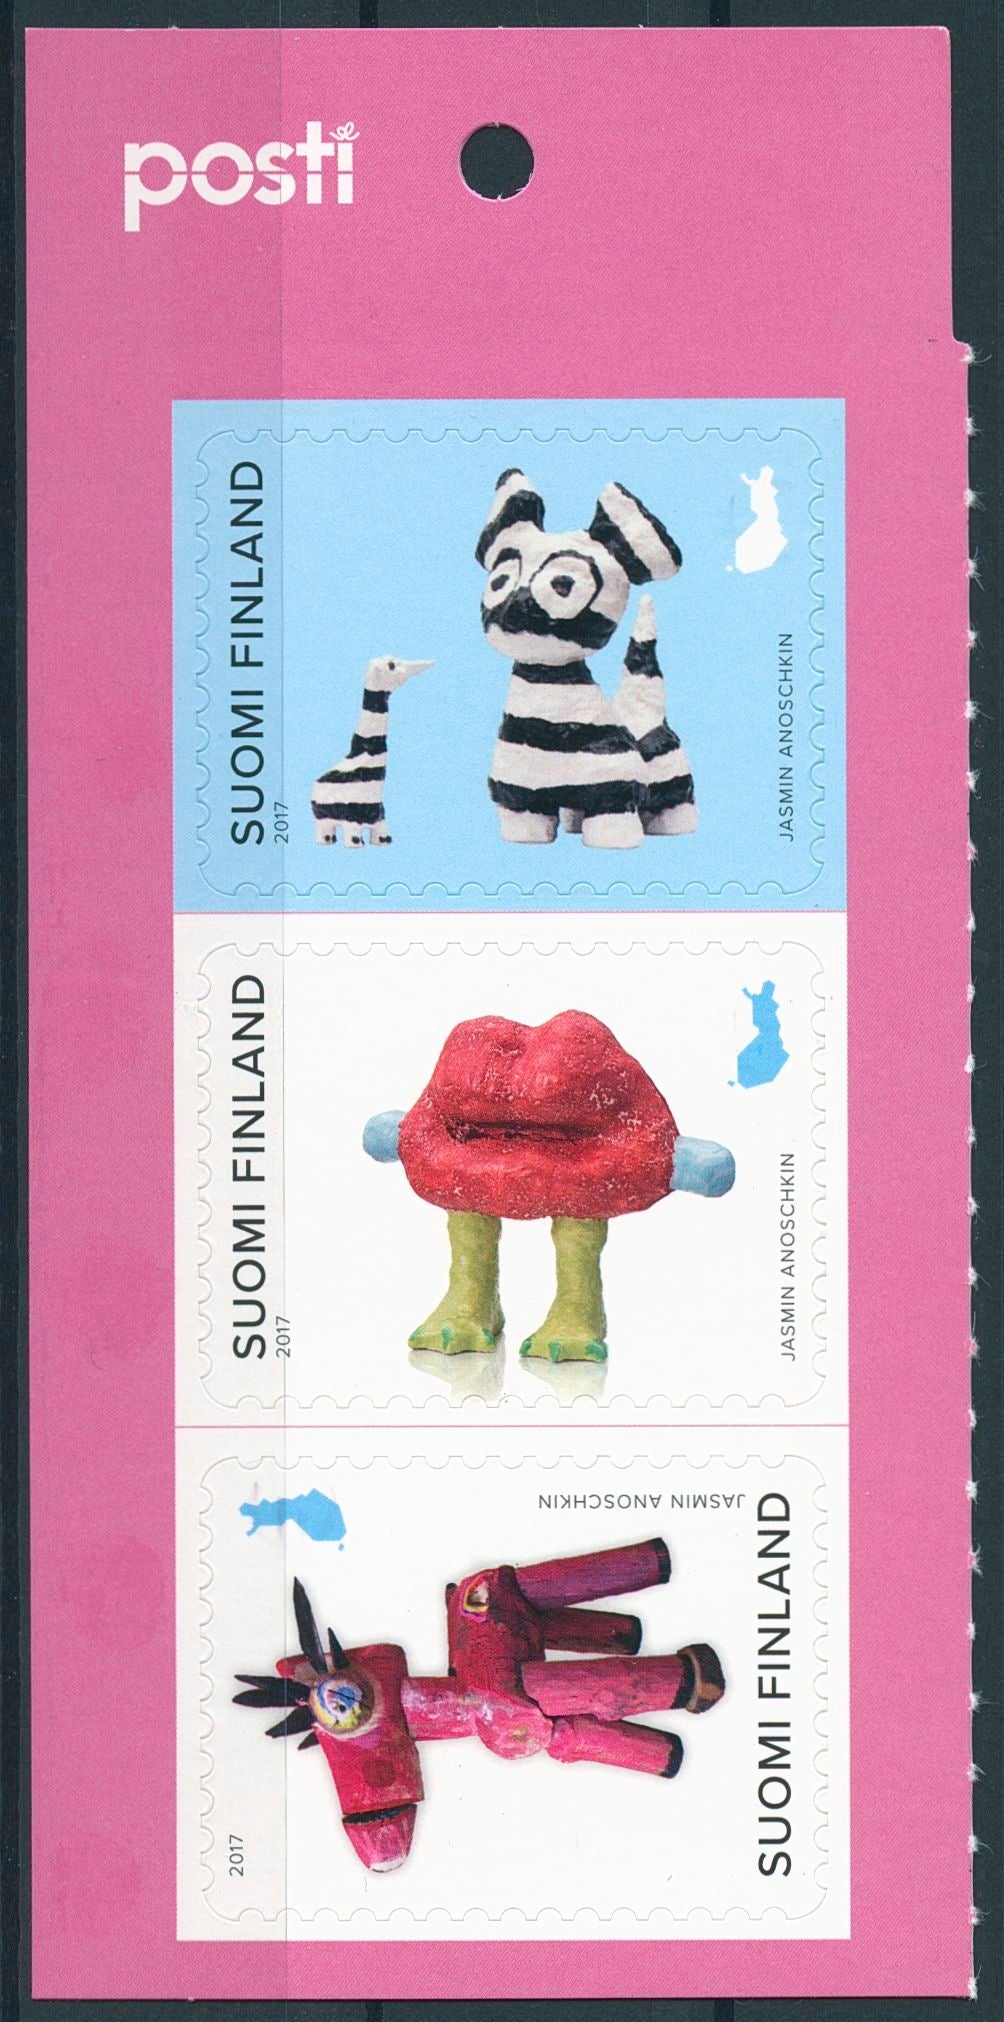 Finland 2017 MNH Posti Art Award Jasmin Anoschkin 3v S/A Set Sculptures Stamps